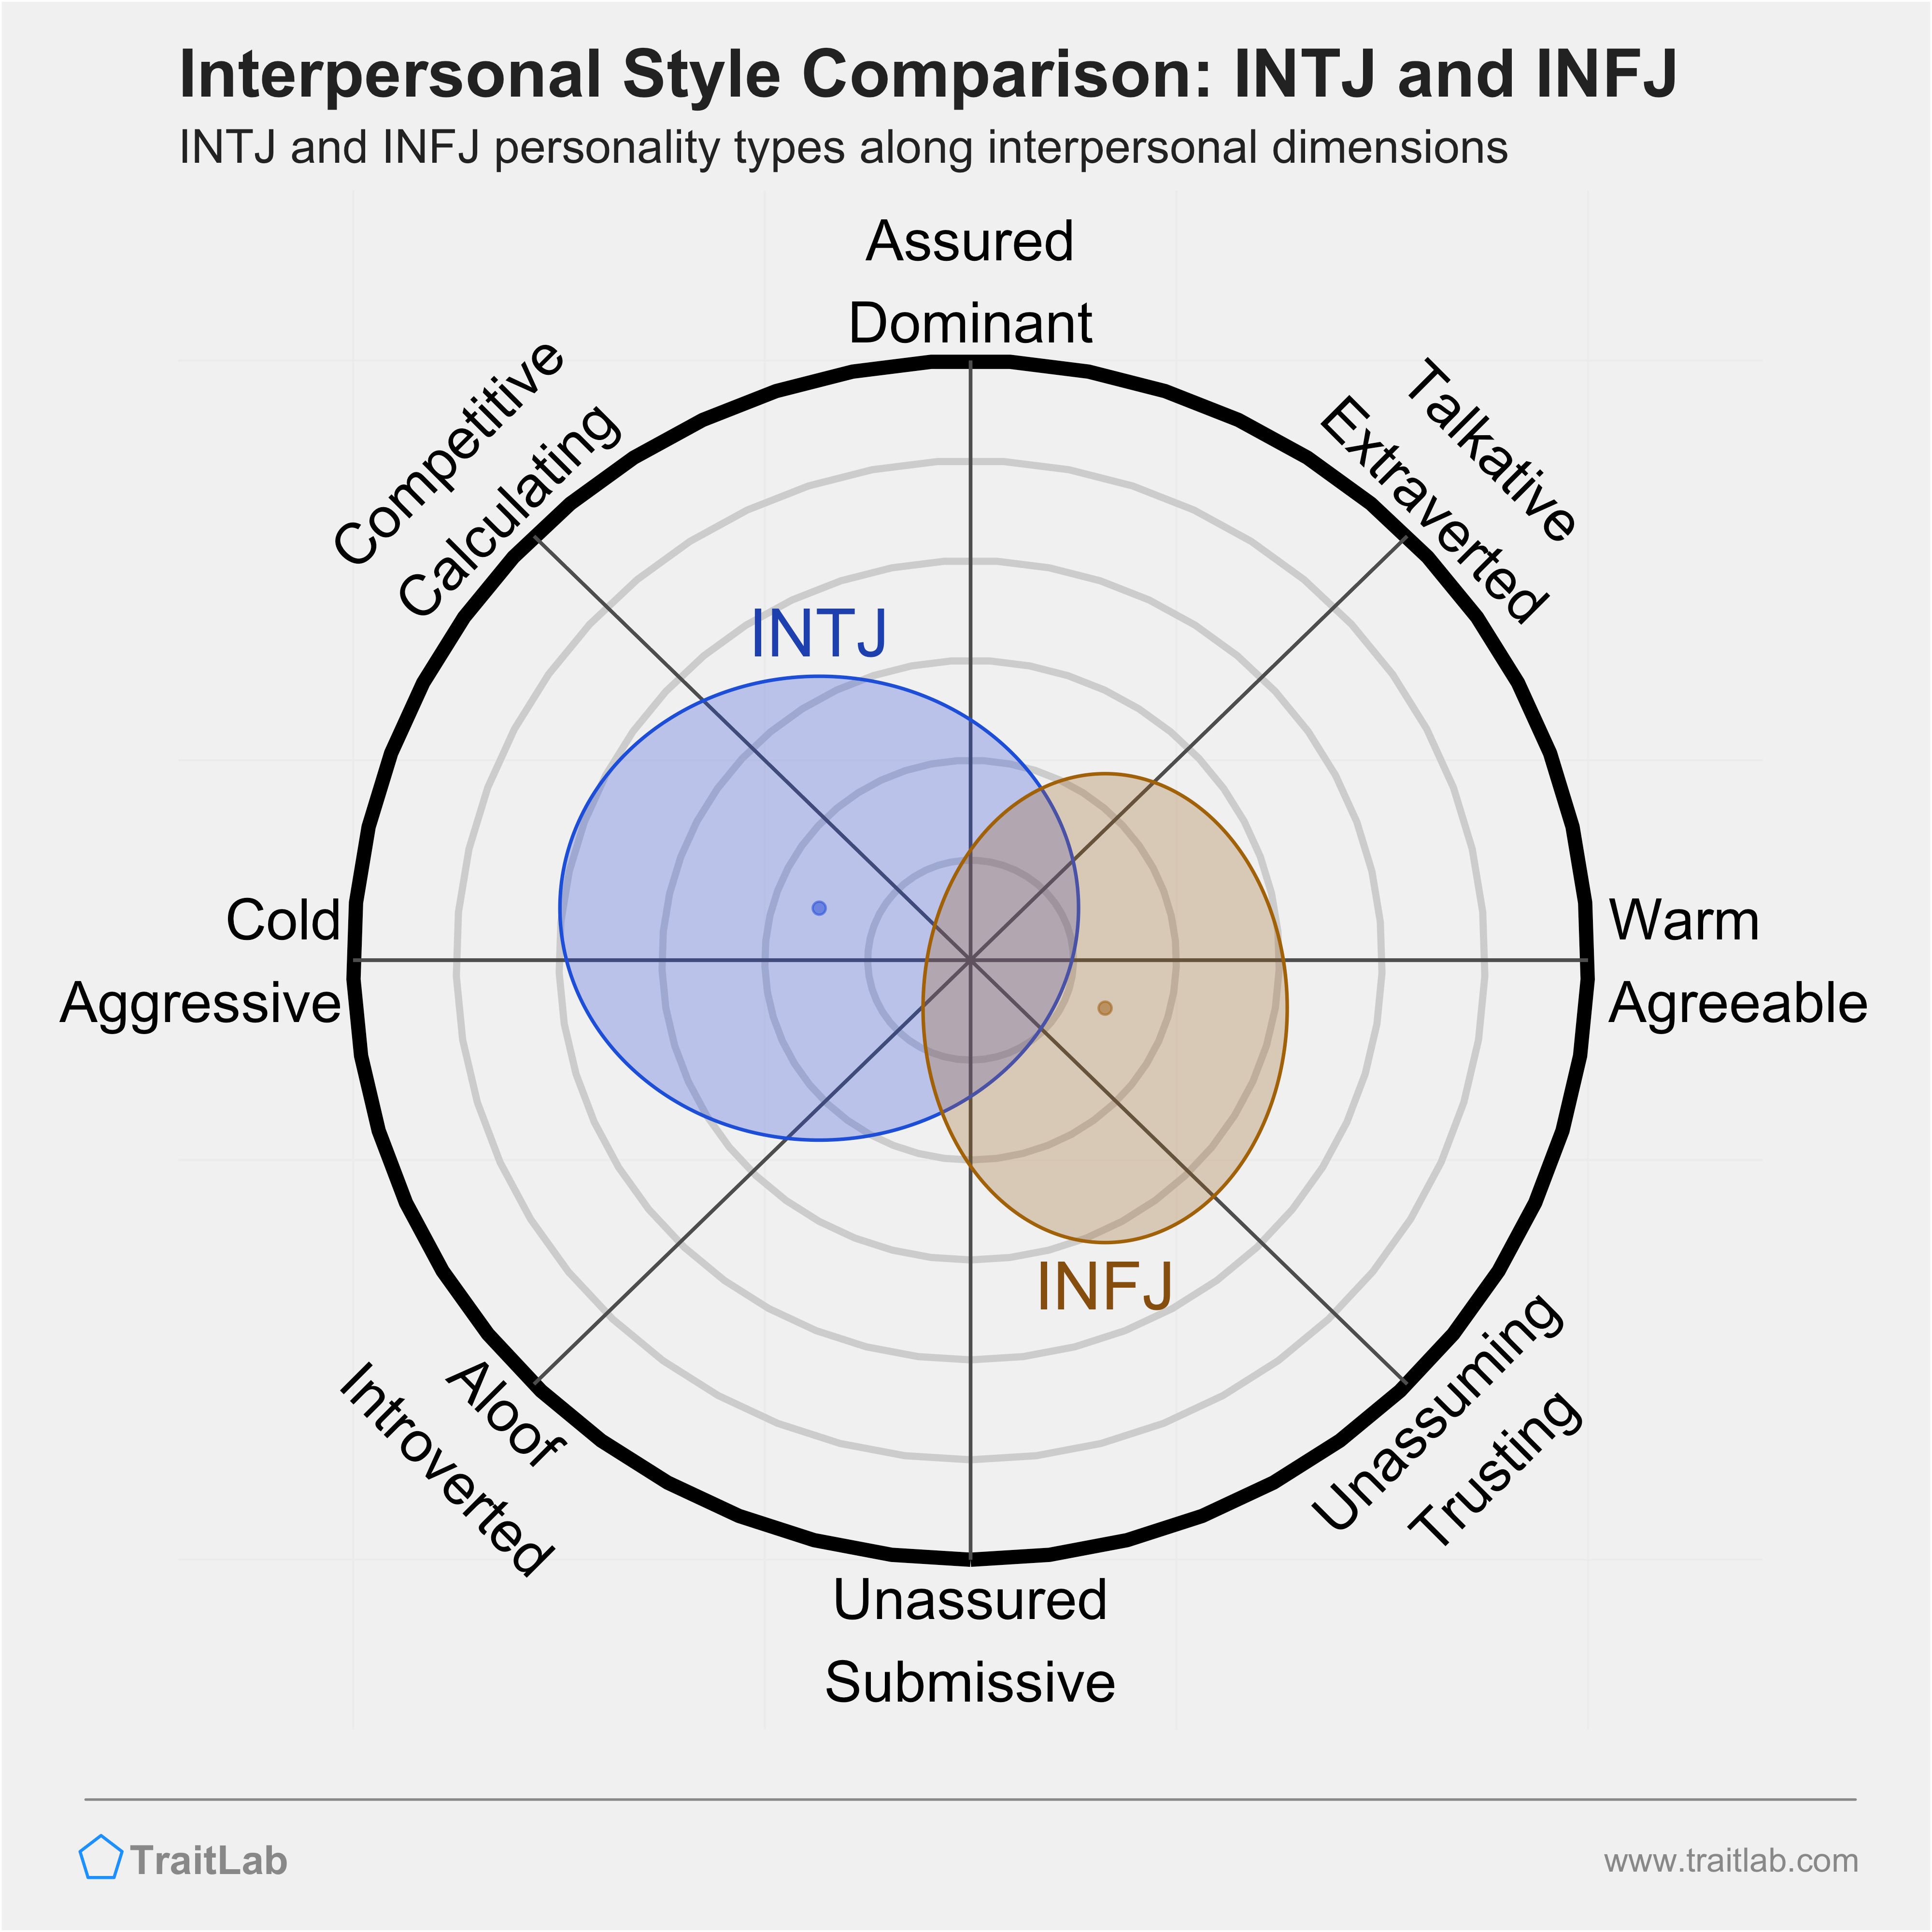 INTJ and INFJ comparison across interpersonal dimensions